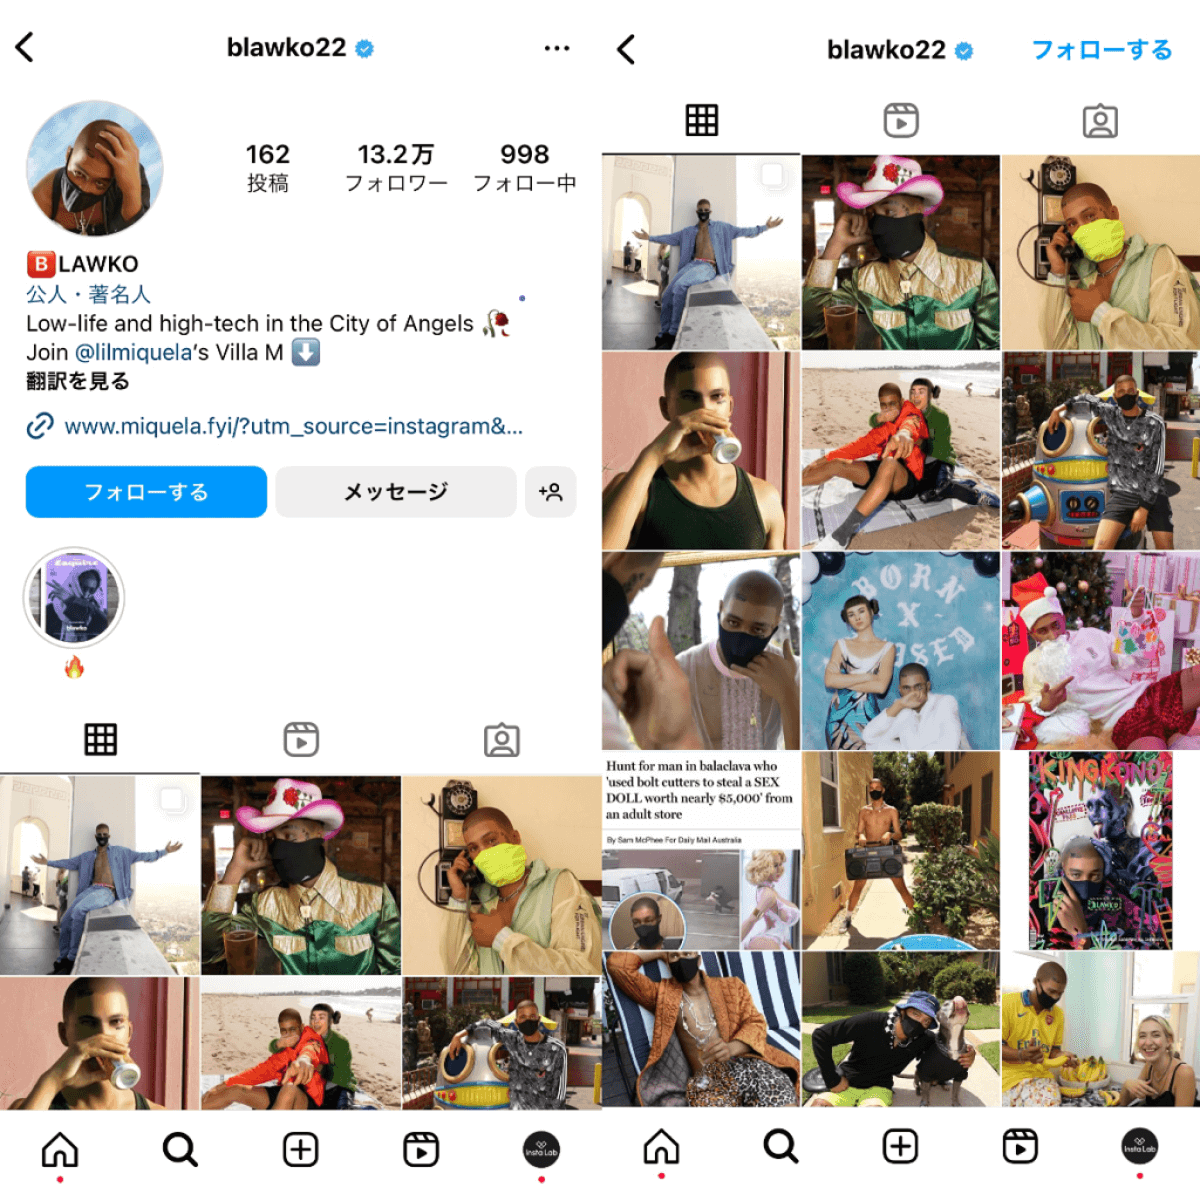 instagram-account-blawko22